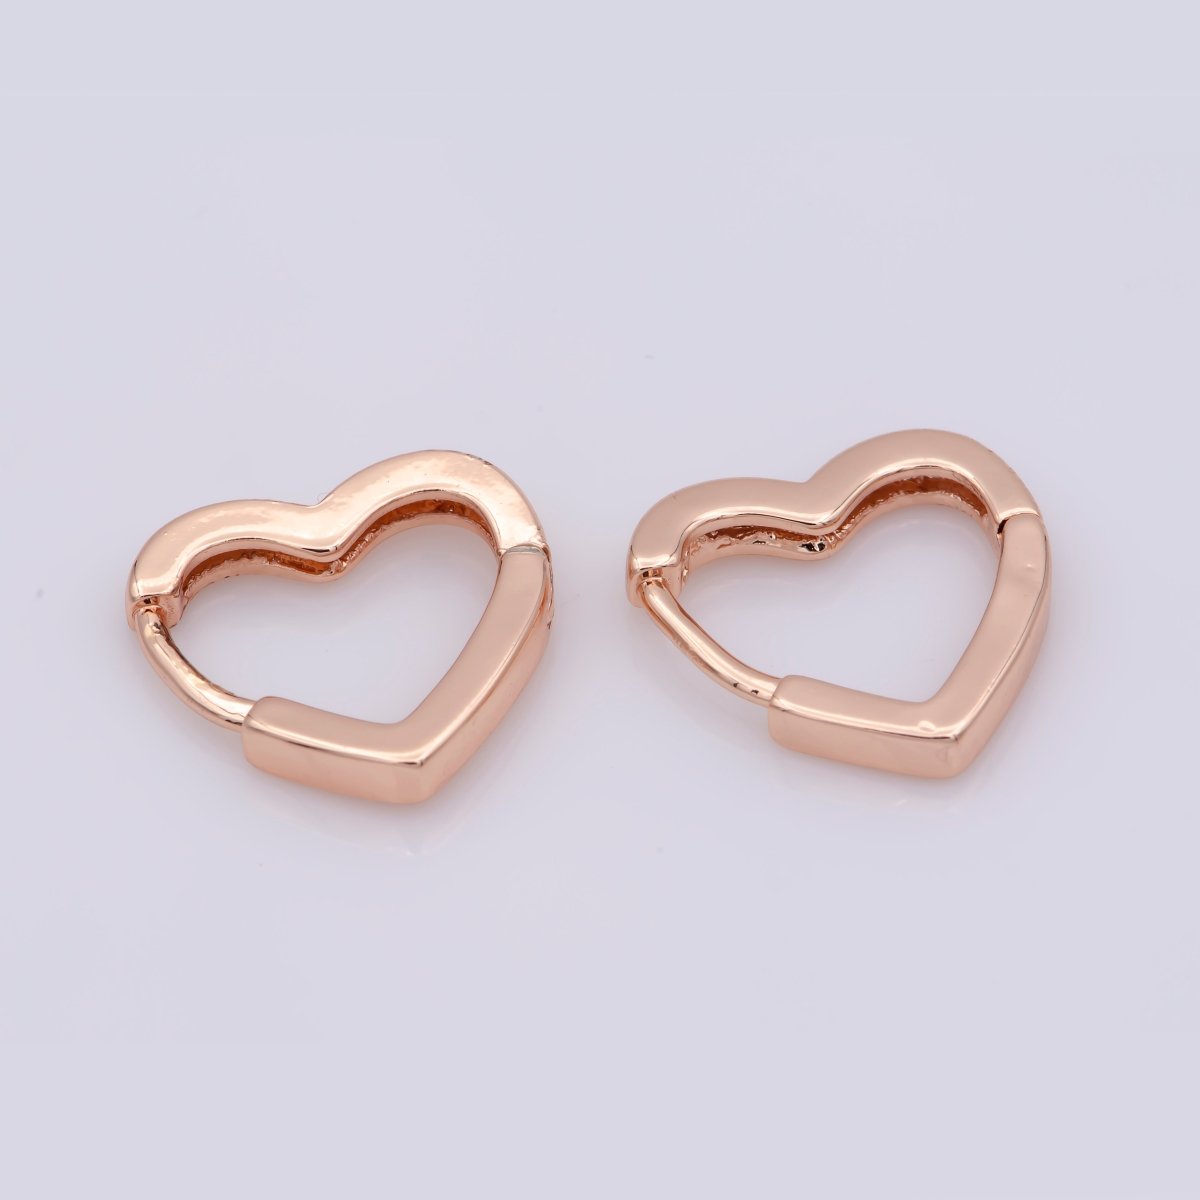 Dainty Gold Heart Hoop Earrings, Small Gold One Touch Hoops, Heart Earring Gift For Her 24k Gold Filled Earring K-582 K-760 Q-084 - DLUXCA